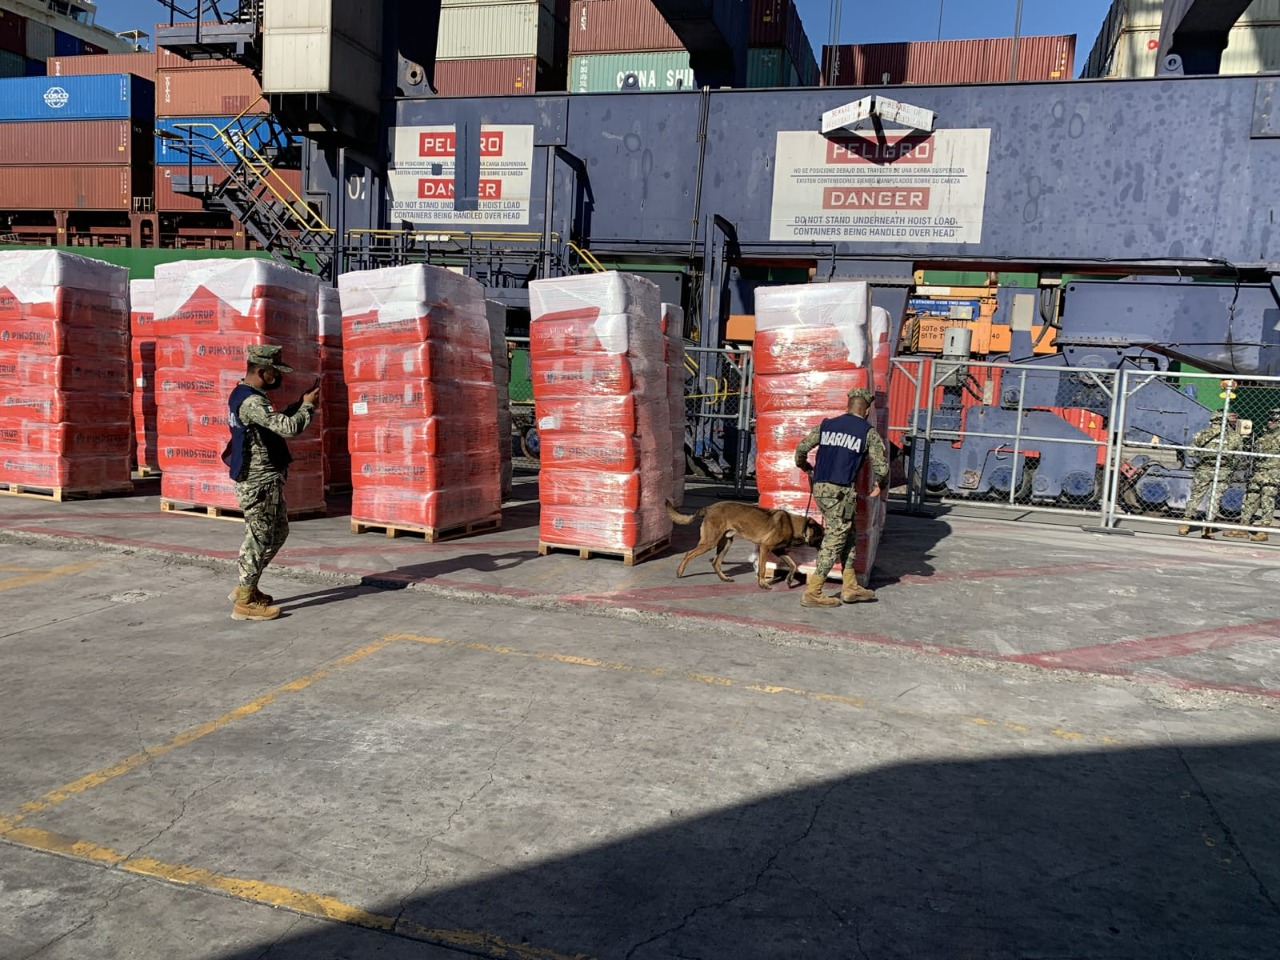 Incauta SEMAR 50 paquetes de clorhidrato de cocaí­na en Puerto de Ensenada |